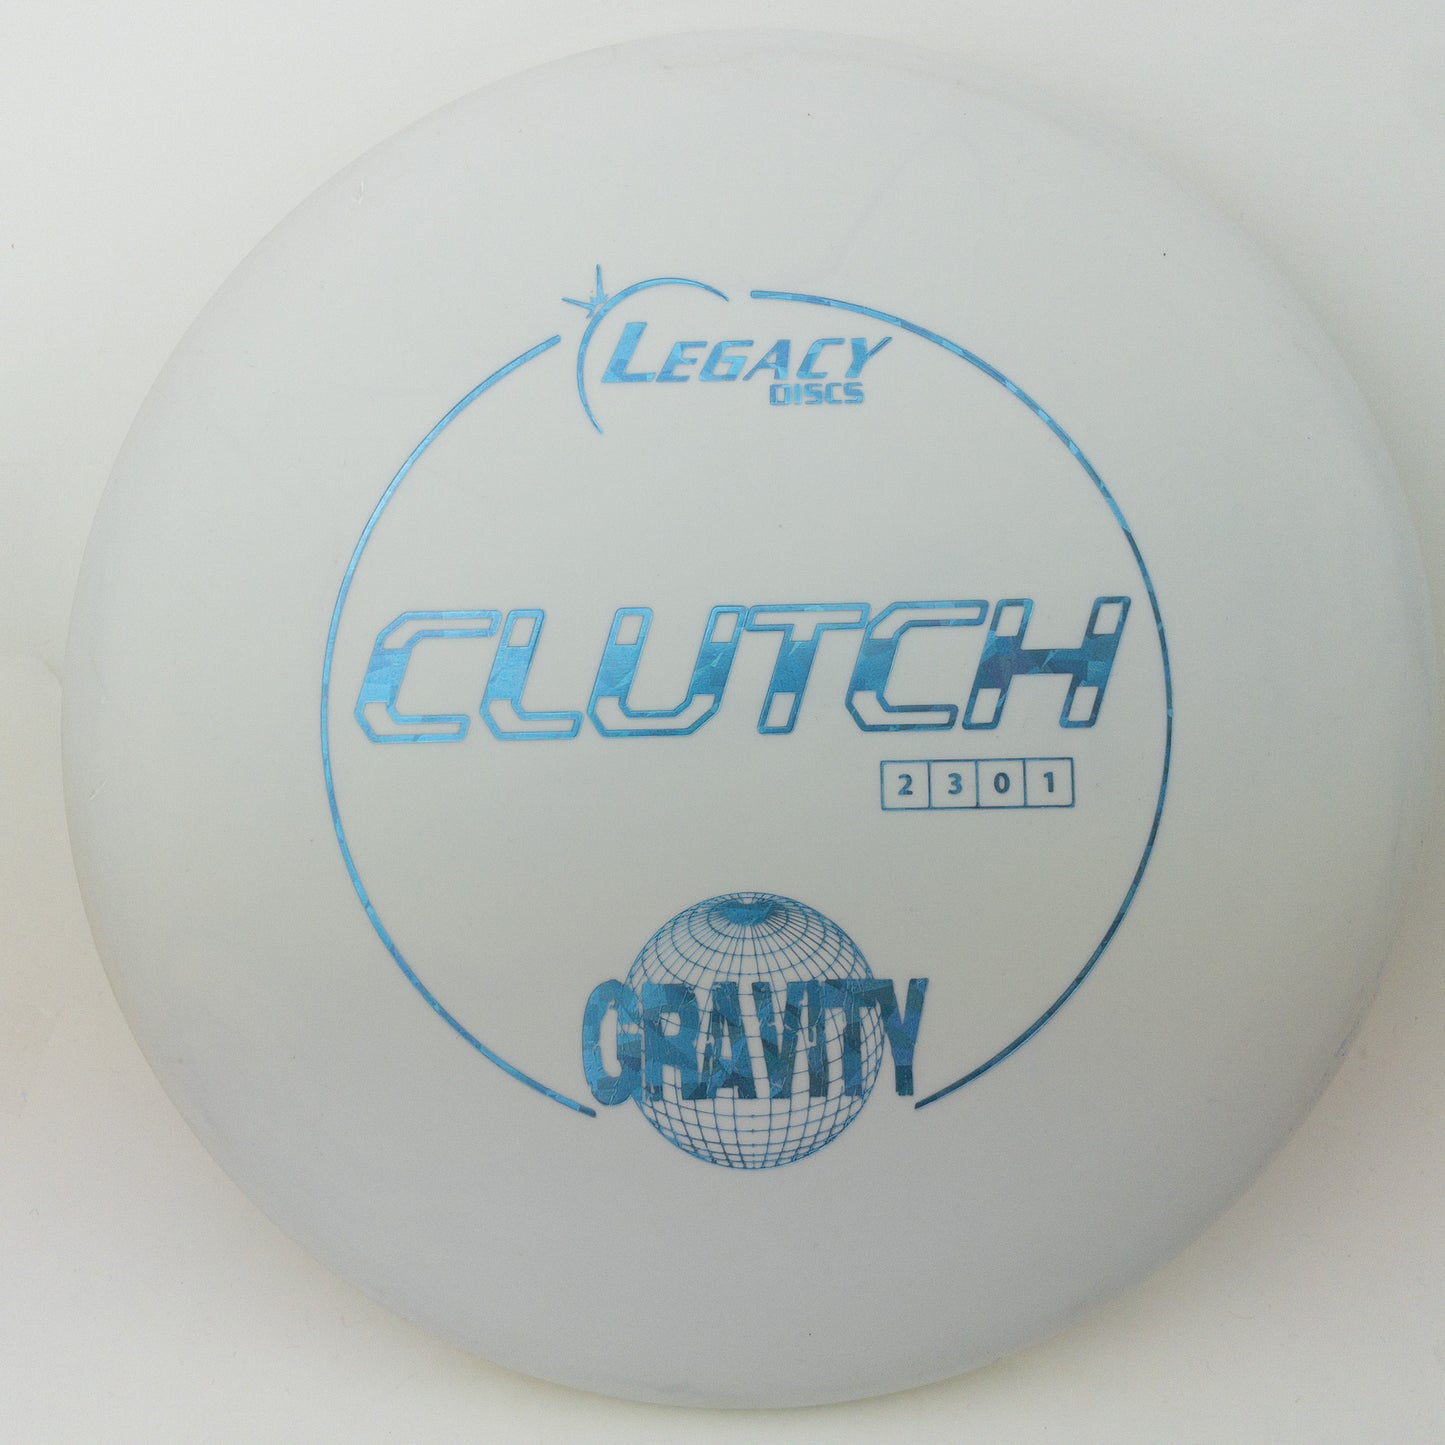 Legacy Gravity Clutch